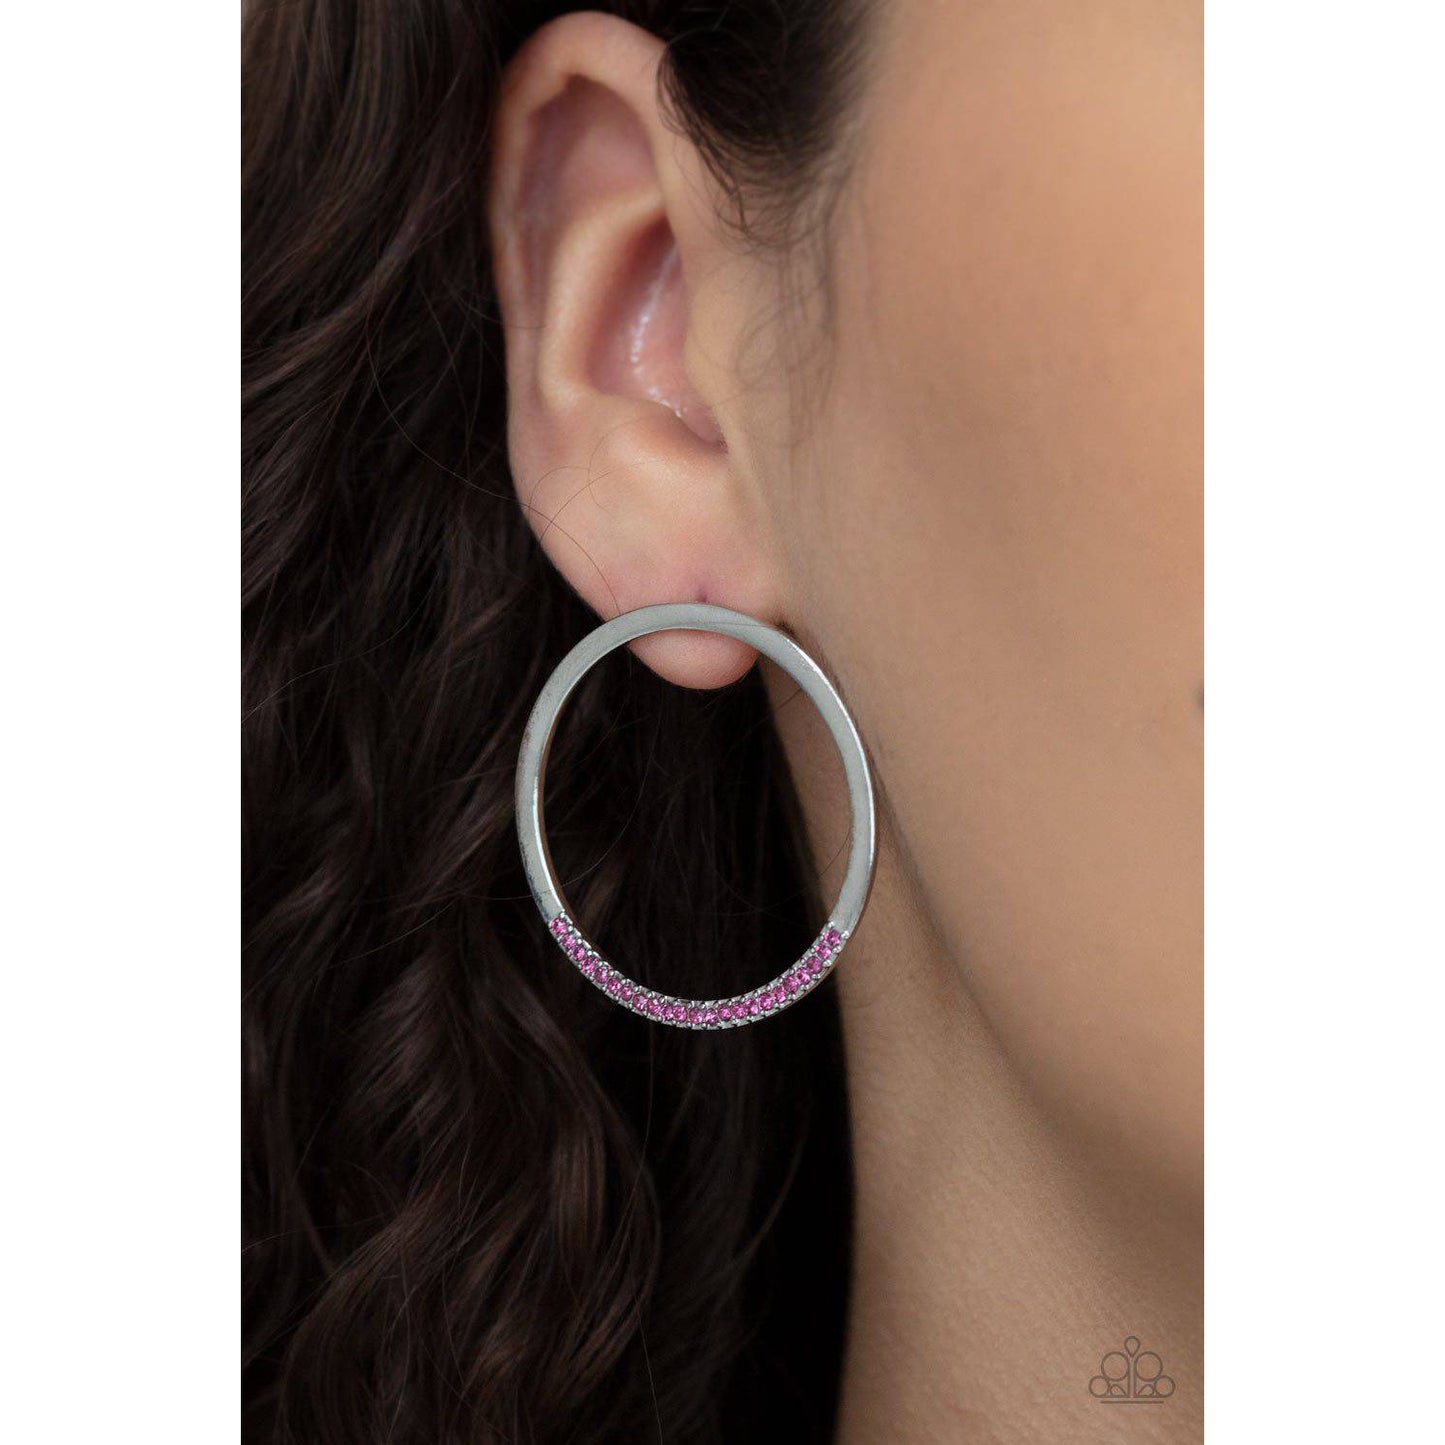 Spot On Opulence - Pink Rhinestone Earrings - Paparazzi Accessories - GlaMarous Titi Jewels